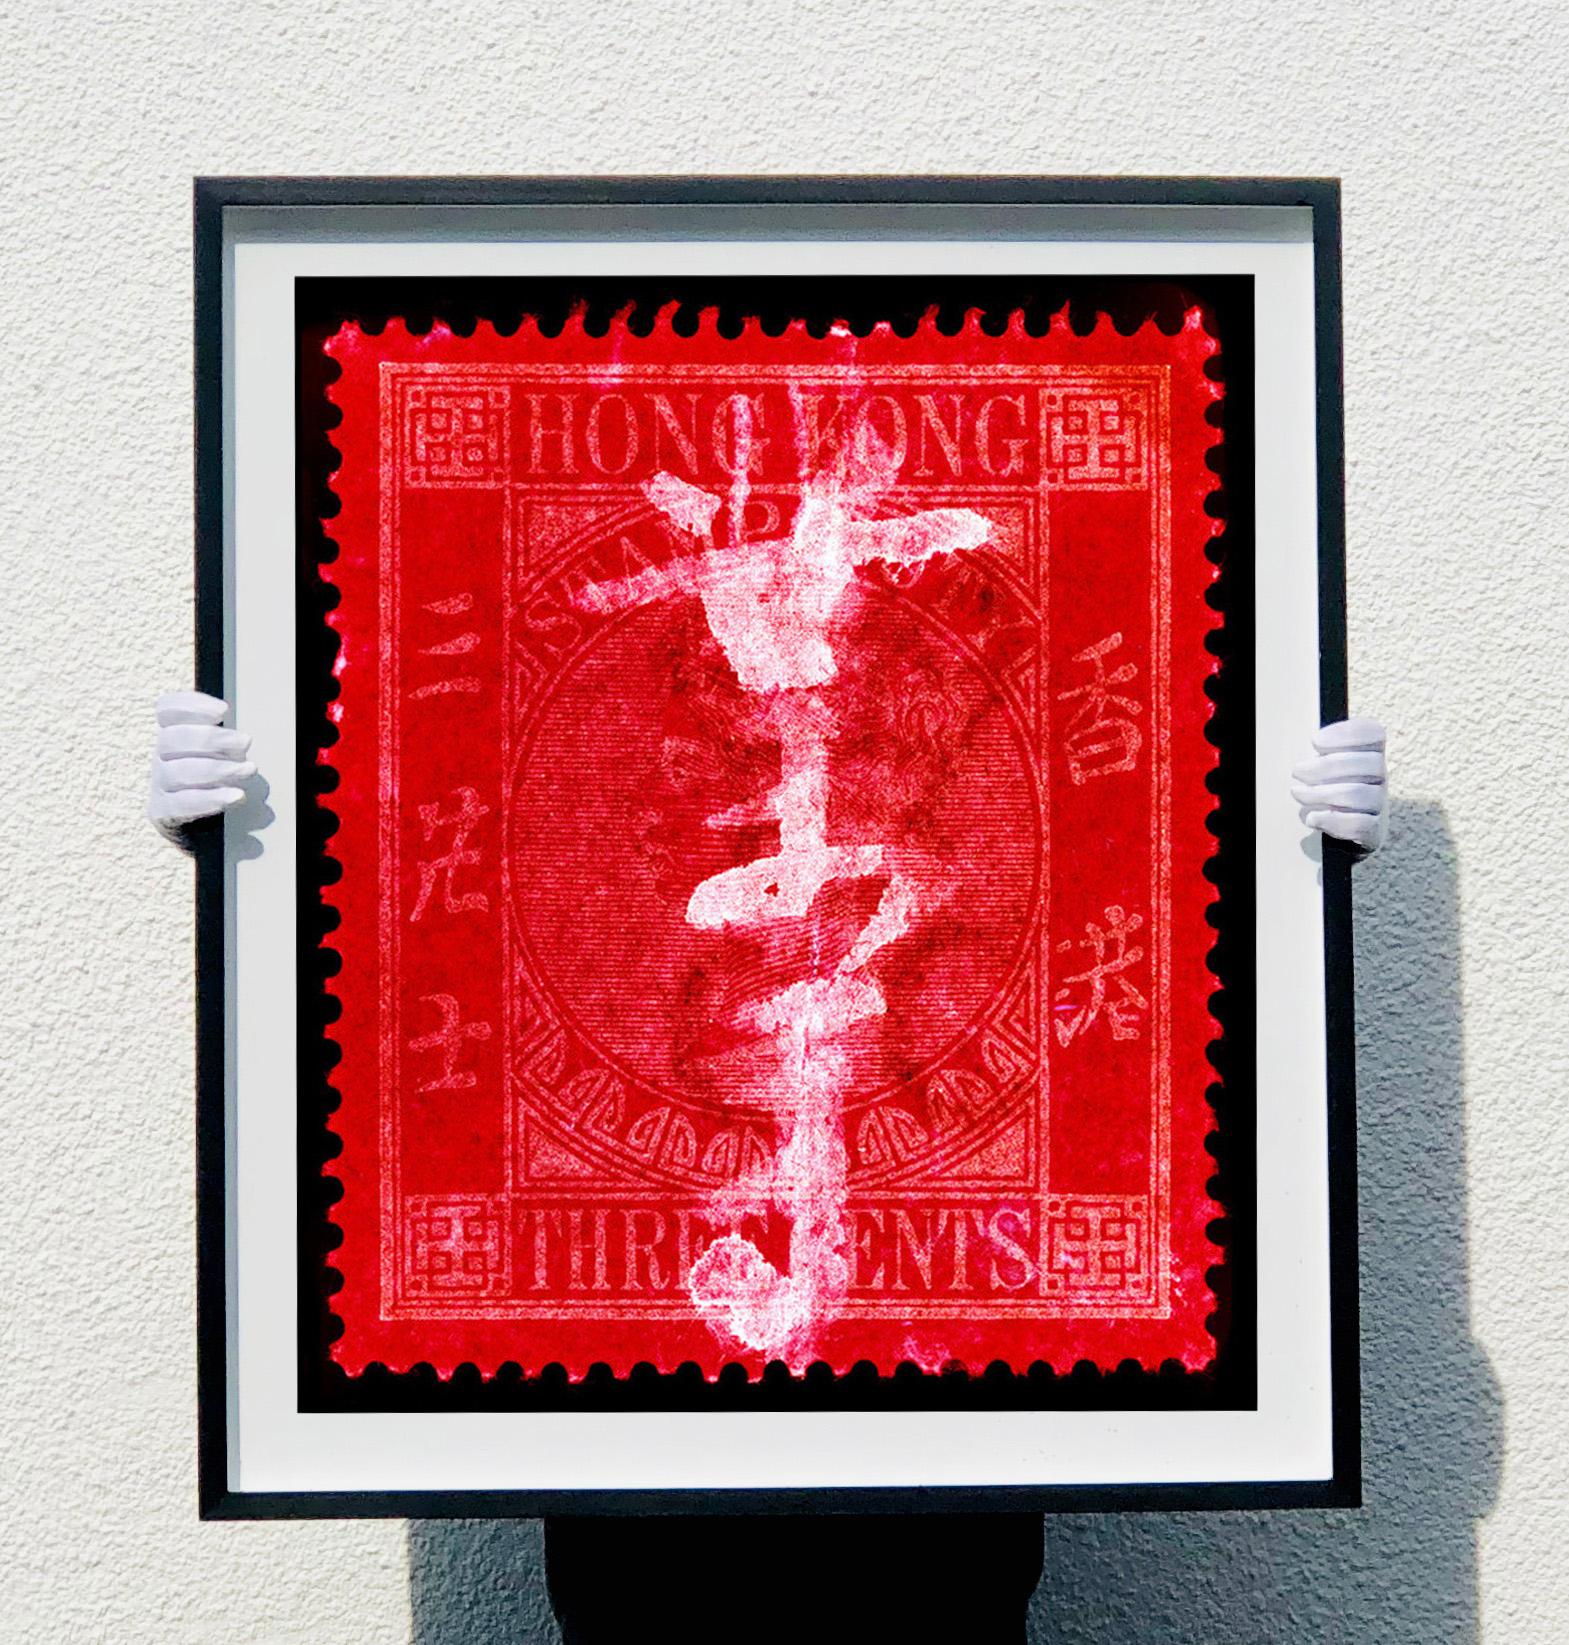 Stempel-Kollektion, QV 3 Cents - Pop-Art-Farbfotografie (Rot), Print, von Heidler & Heeps